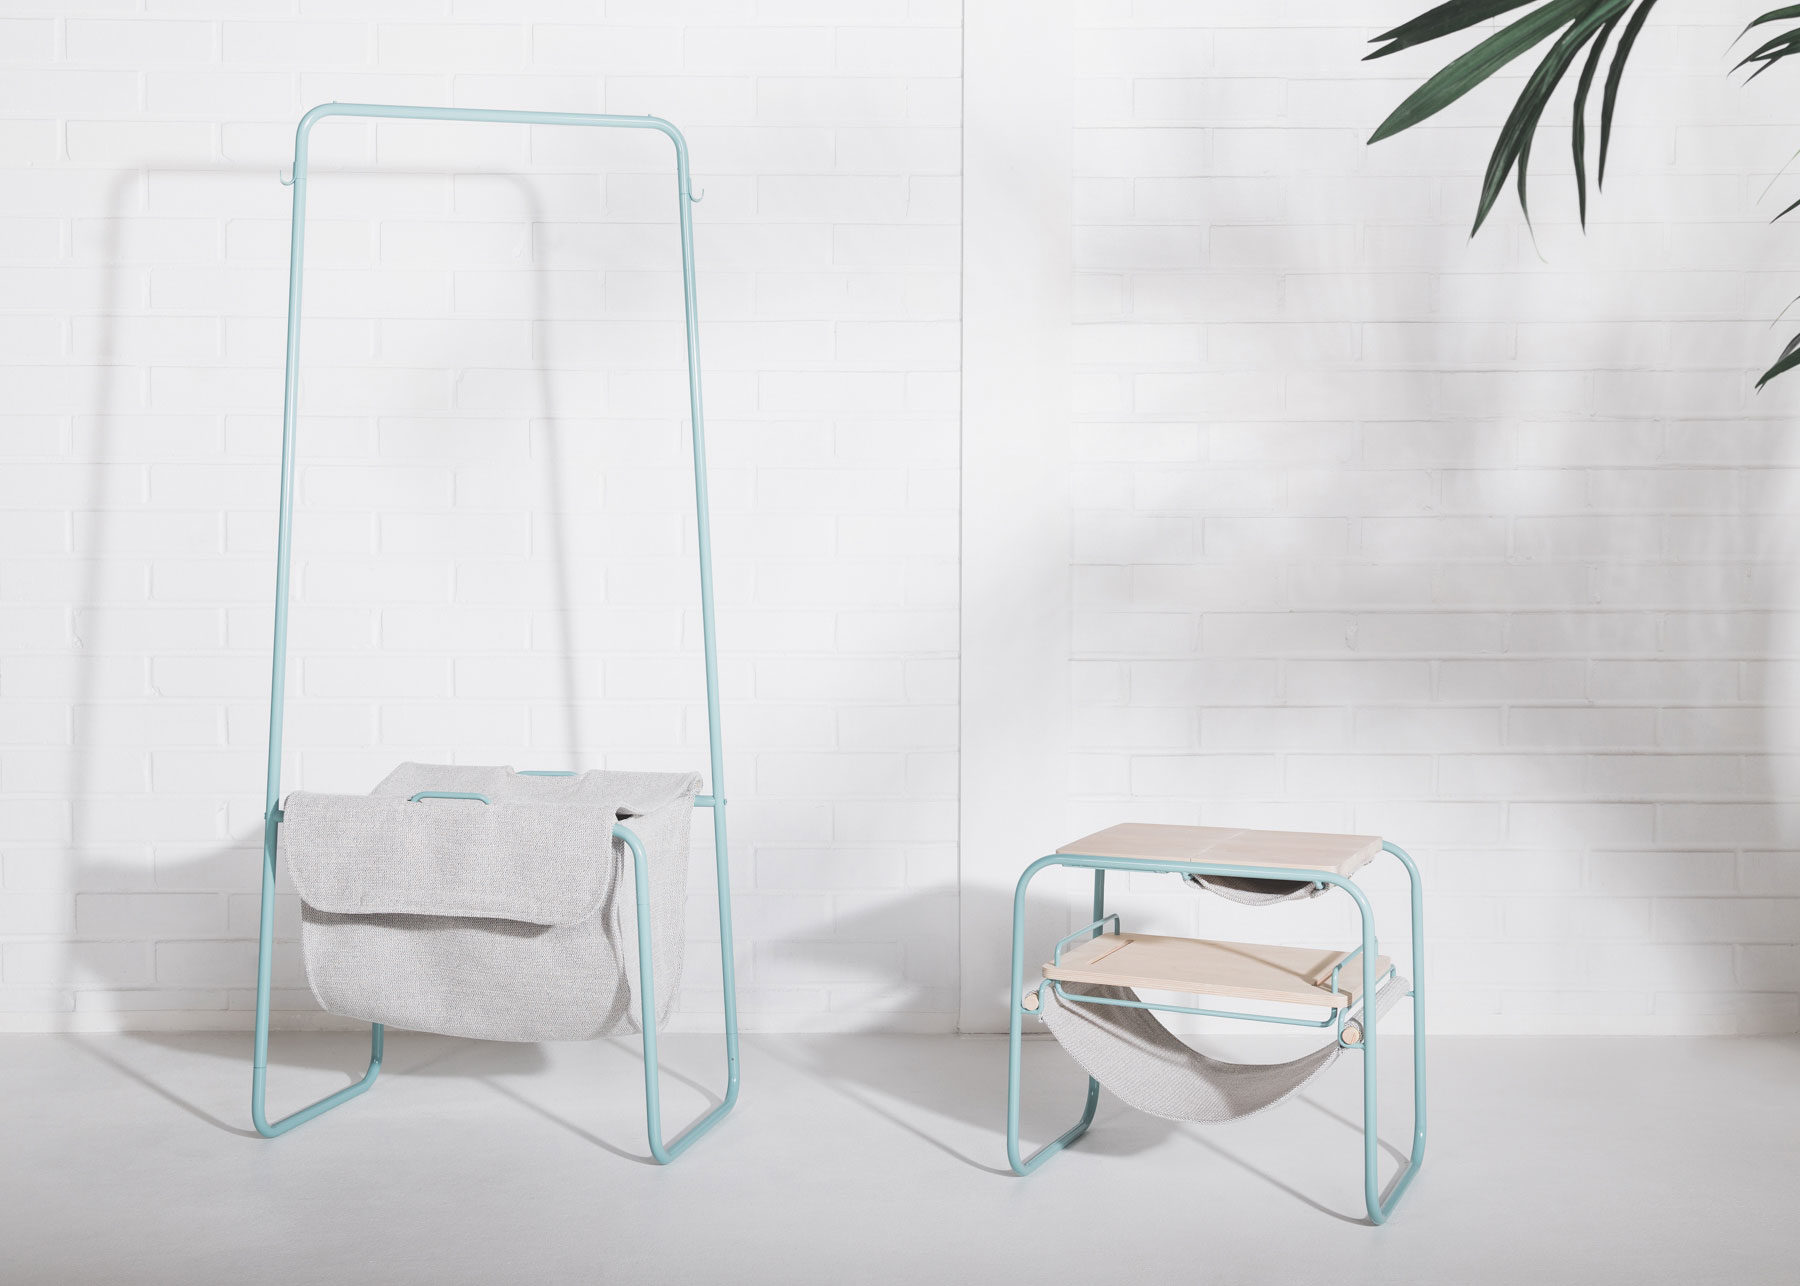 kvan-furniture-series-01